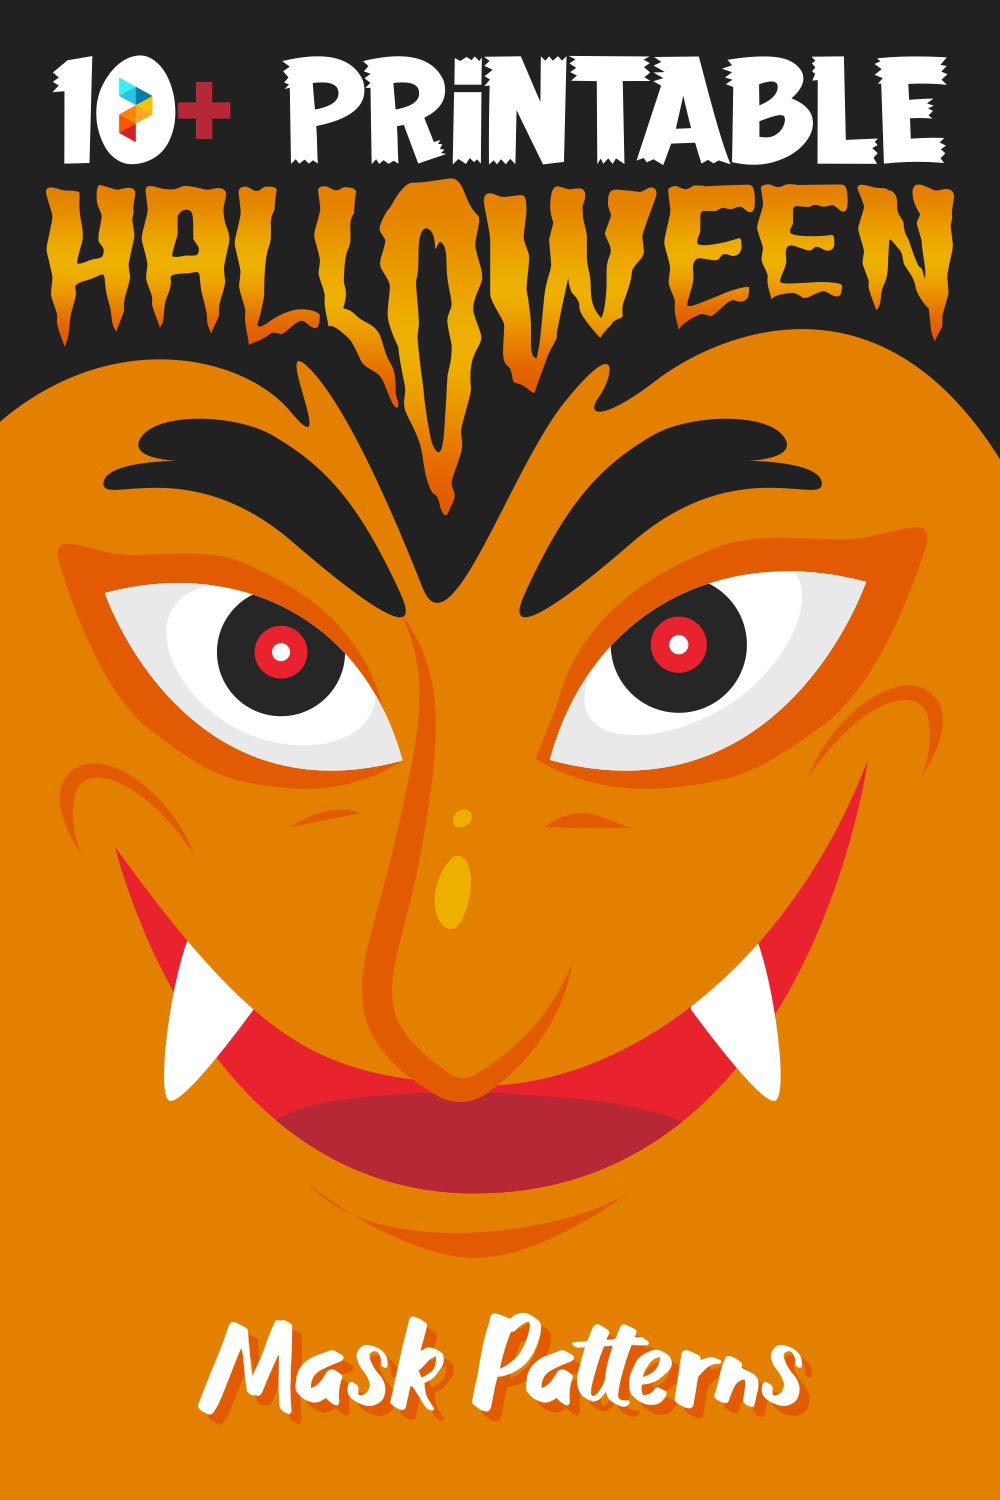 Printable Halloween Mask Patterns